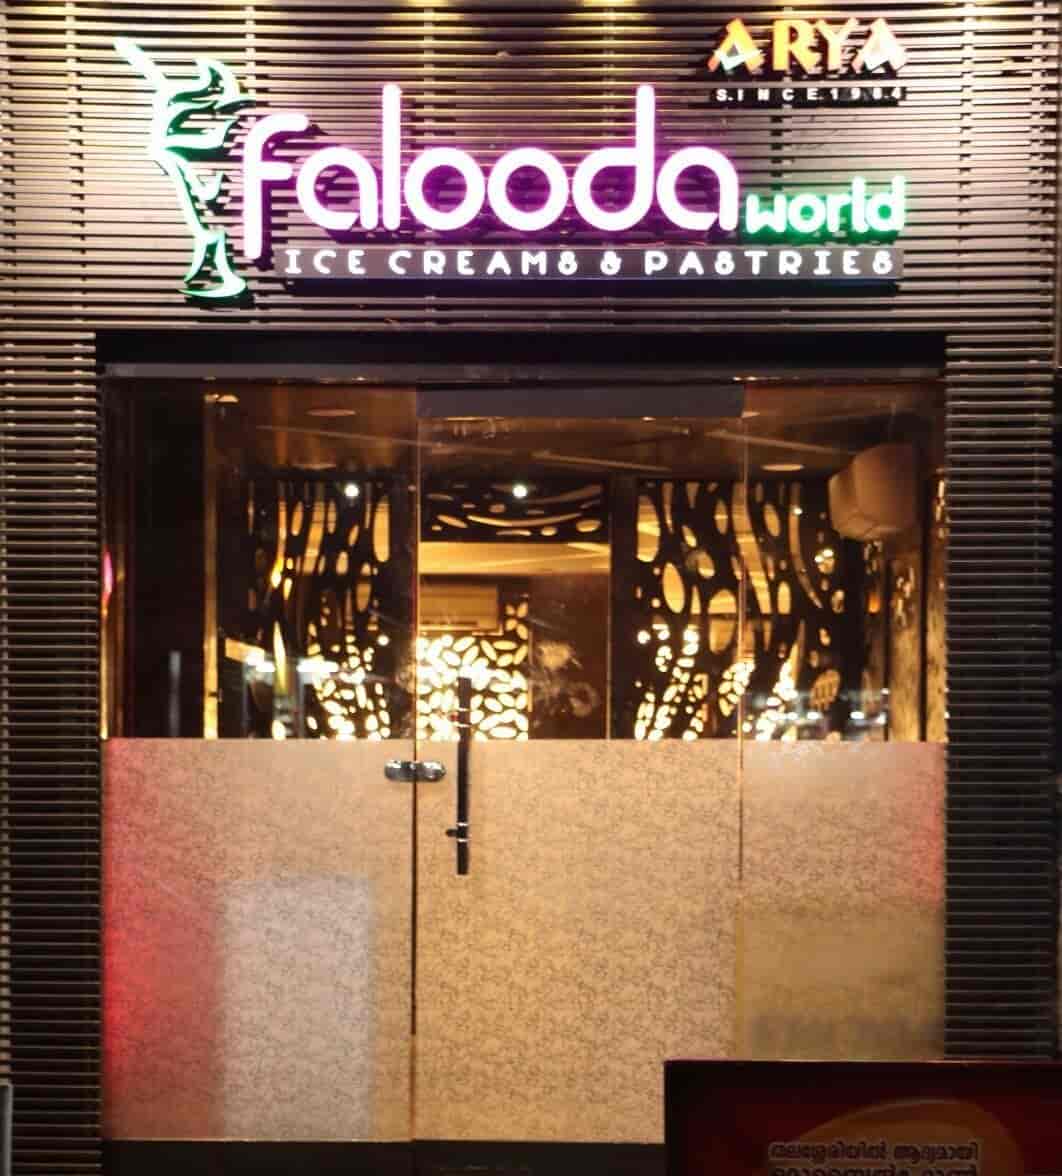 nearby falooda shop